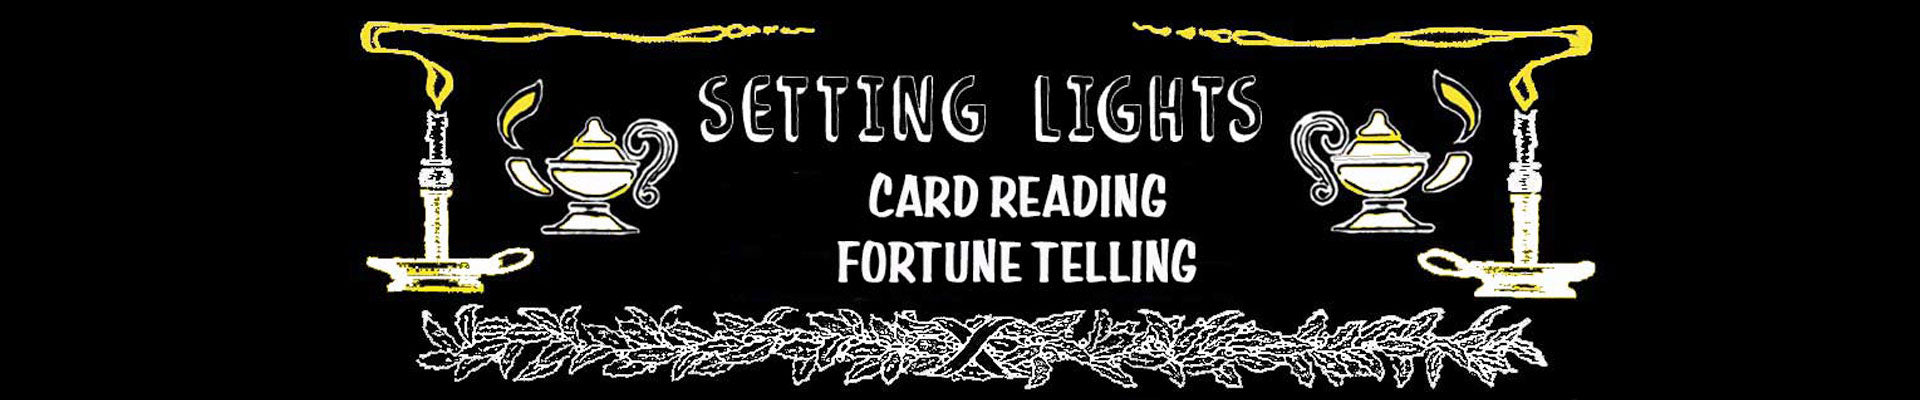 Card Readings